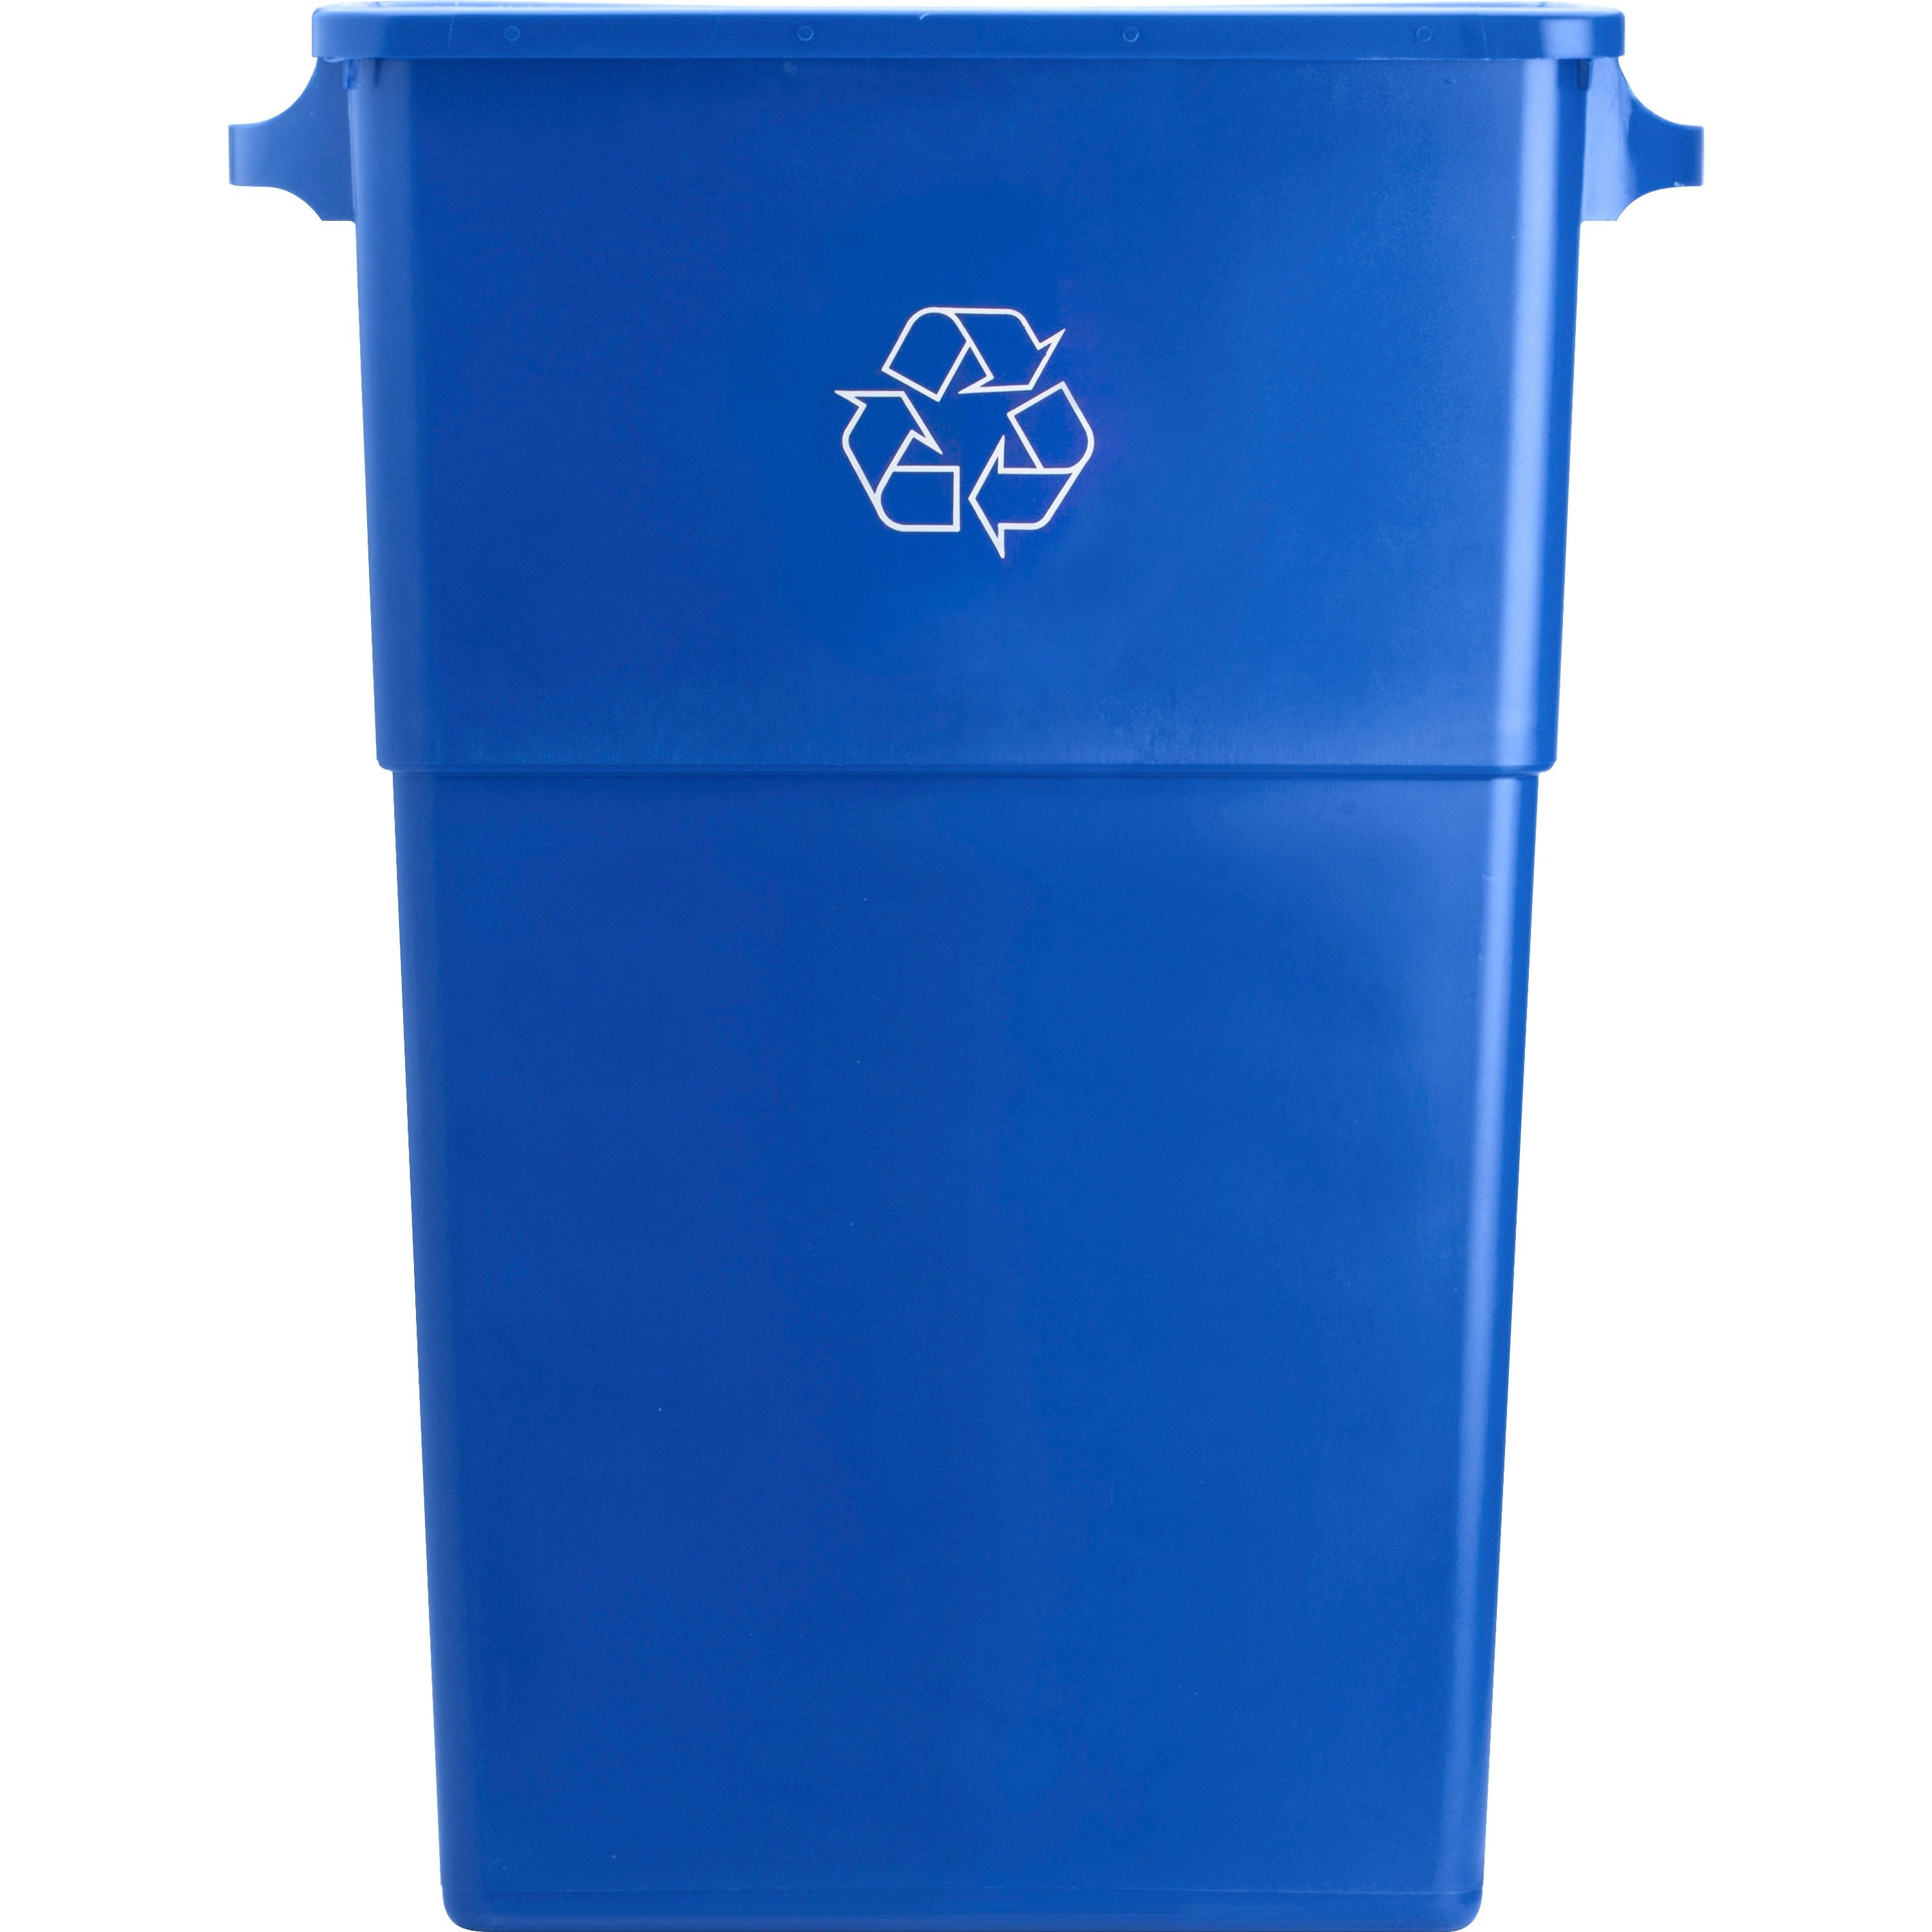 Genuine Joe 23 Gallon Recycling Container - 23 gal Capacity - Rectangular - 30" Height x 22.5" Width x 11" Depth - Blue, White - 1 Each - 